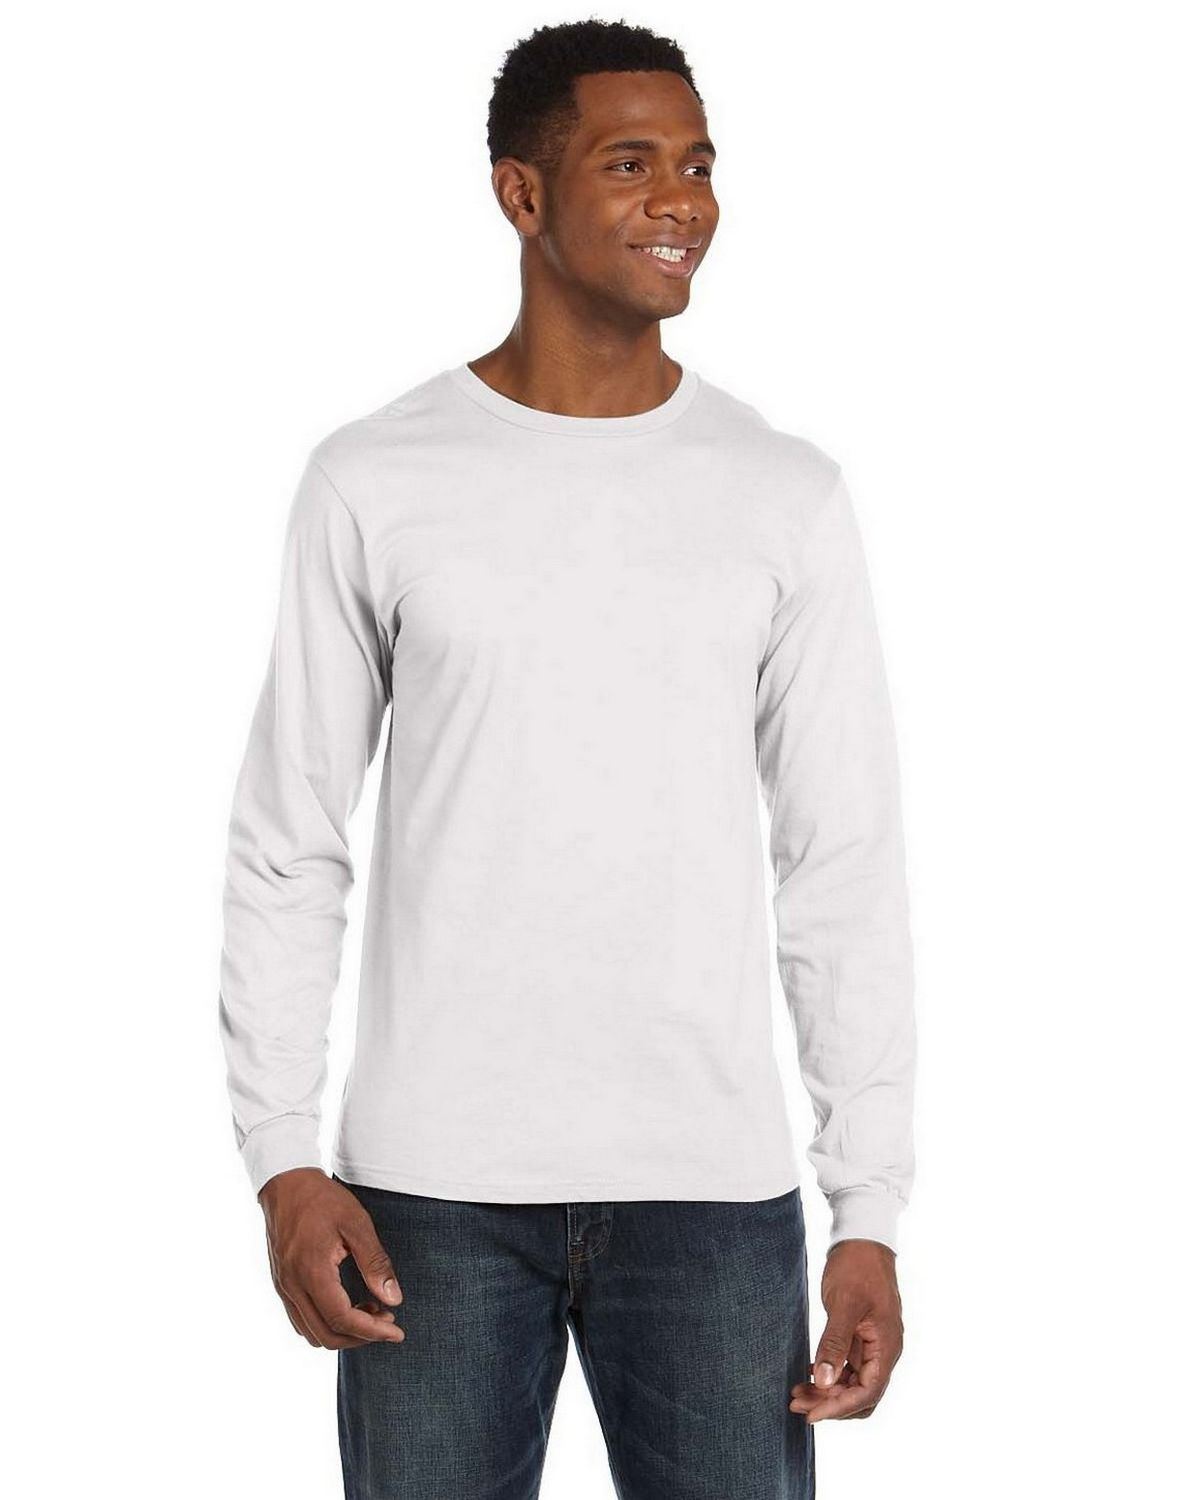 Anvil 949 4.5 oz. Ringspun Cotton Long Sleeve Fashion-Fit T-Shirt - ApparelnBags.com